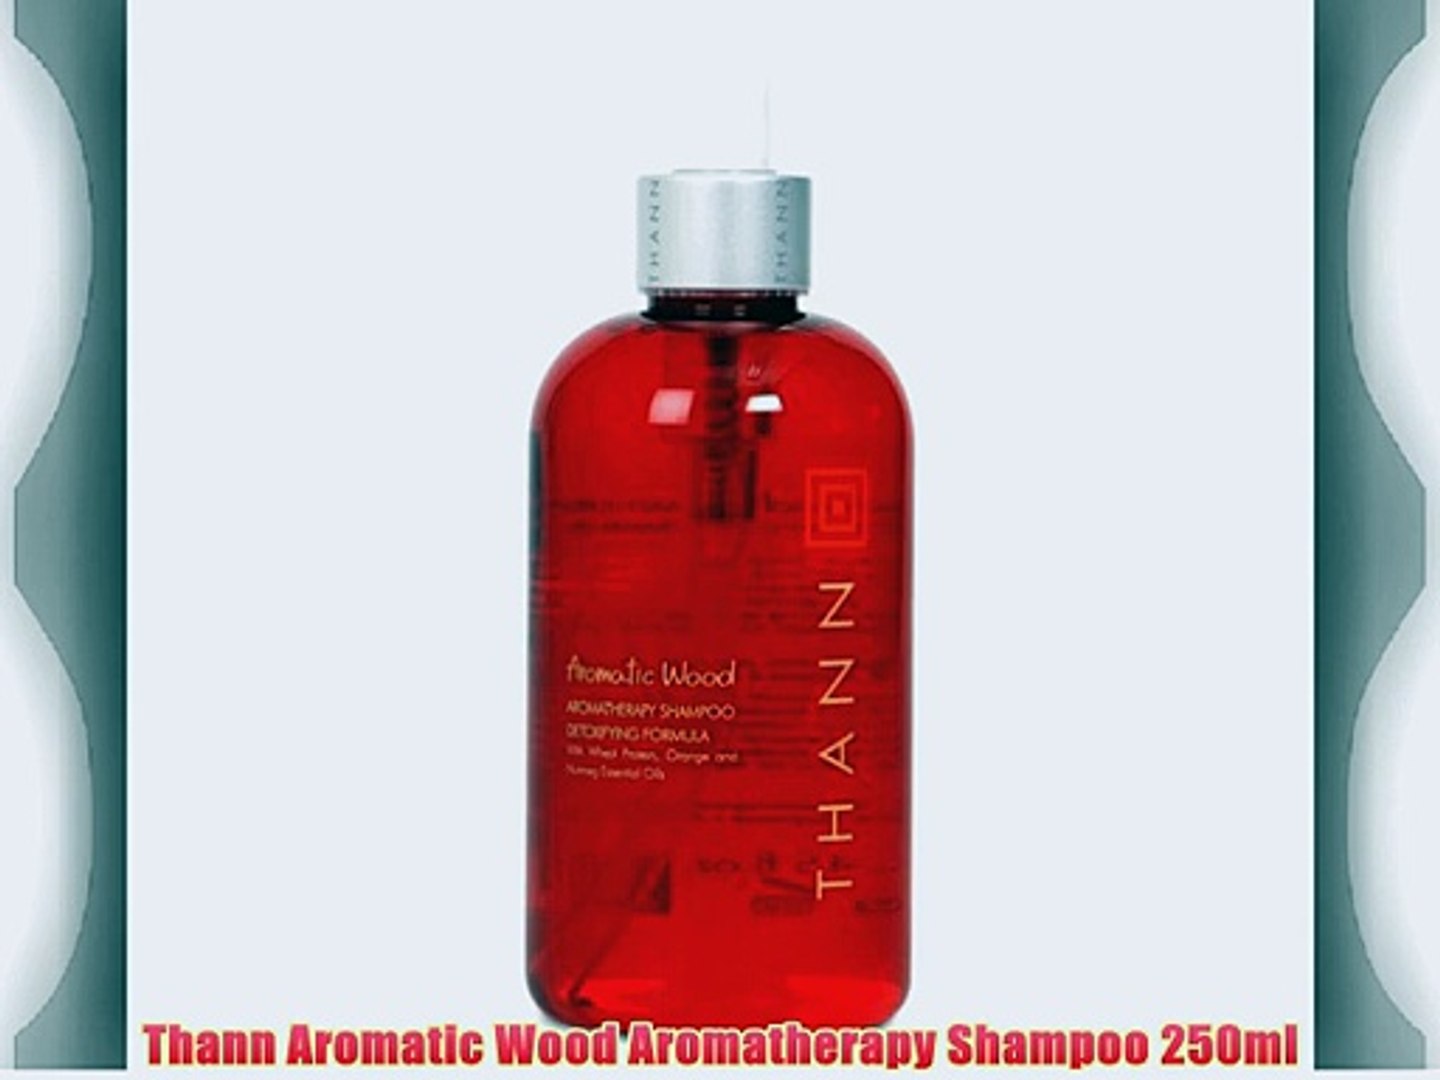 Thann Aromatic Wood Aromatherapy Shampoo 250ml - video Dailymotion